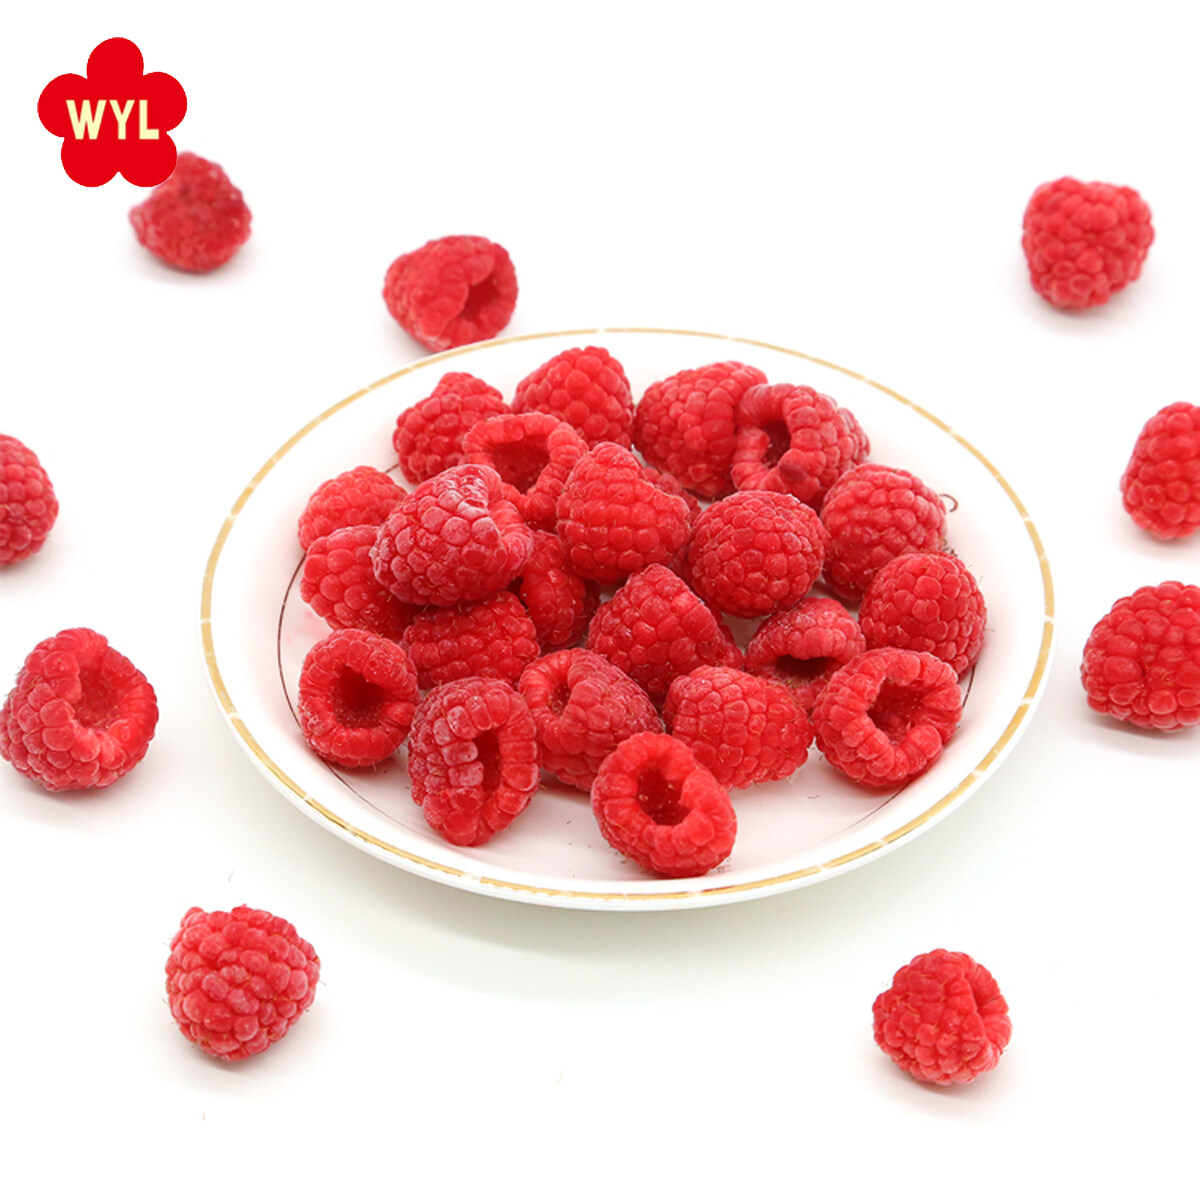 Raspberry congelada frambuesa franfrozenfrozen fruta de fruta china mejor precio exportación de fruta de frambuesa congelada